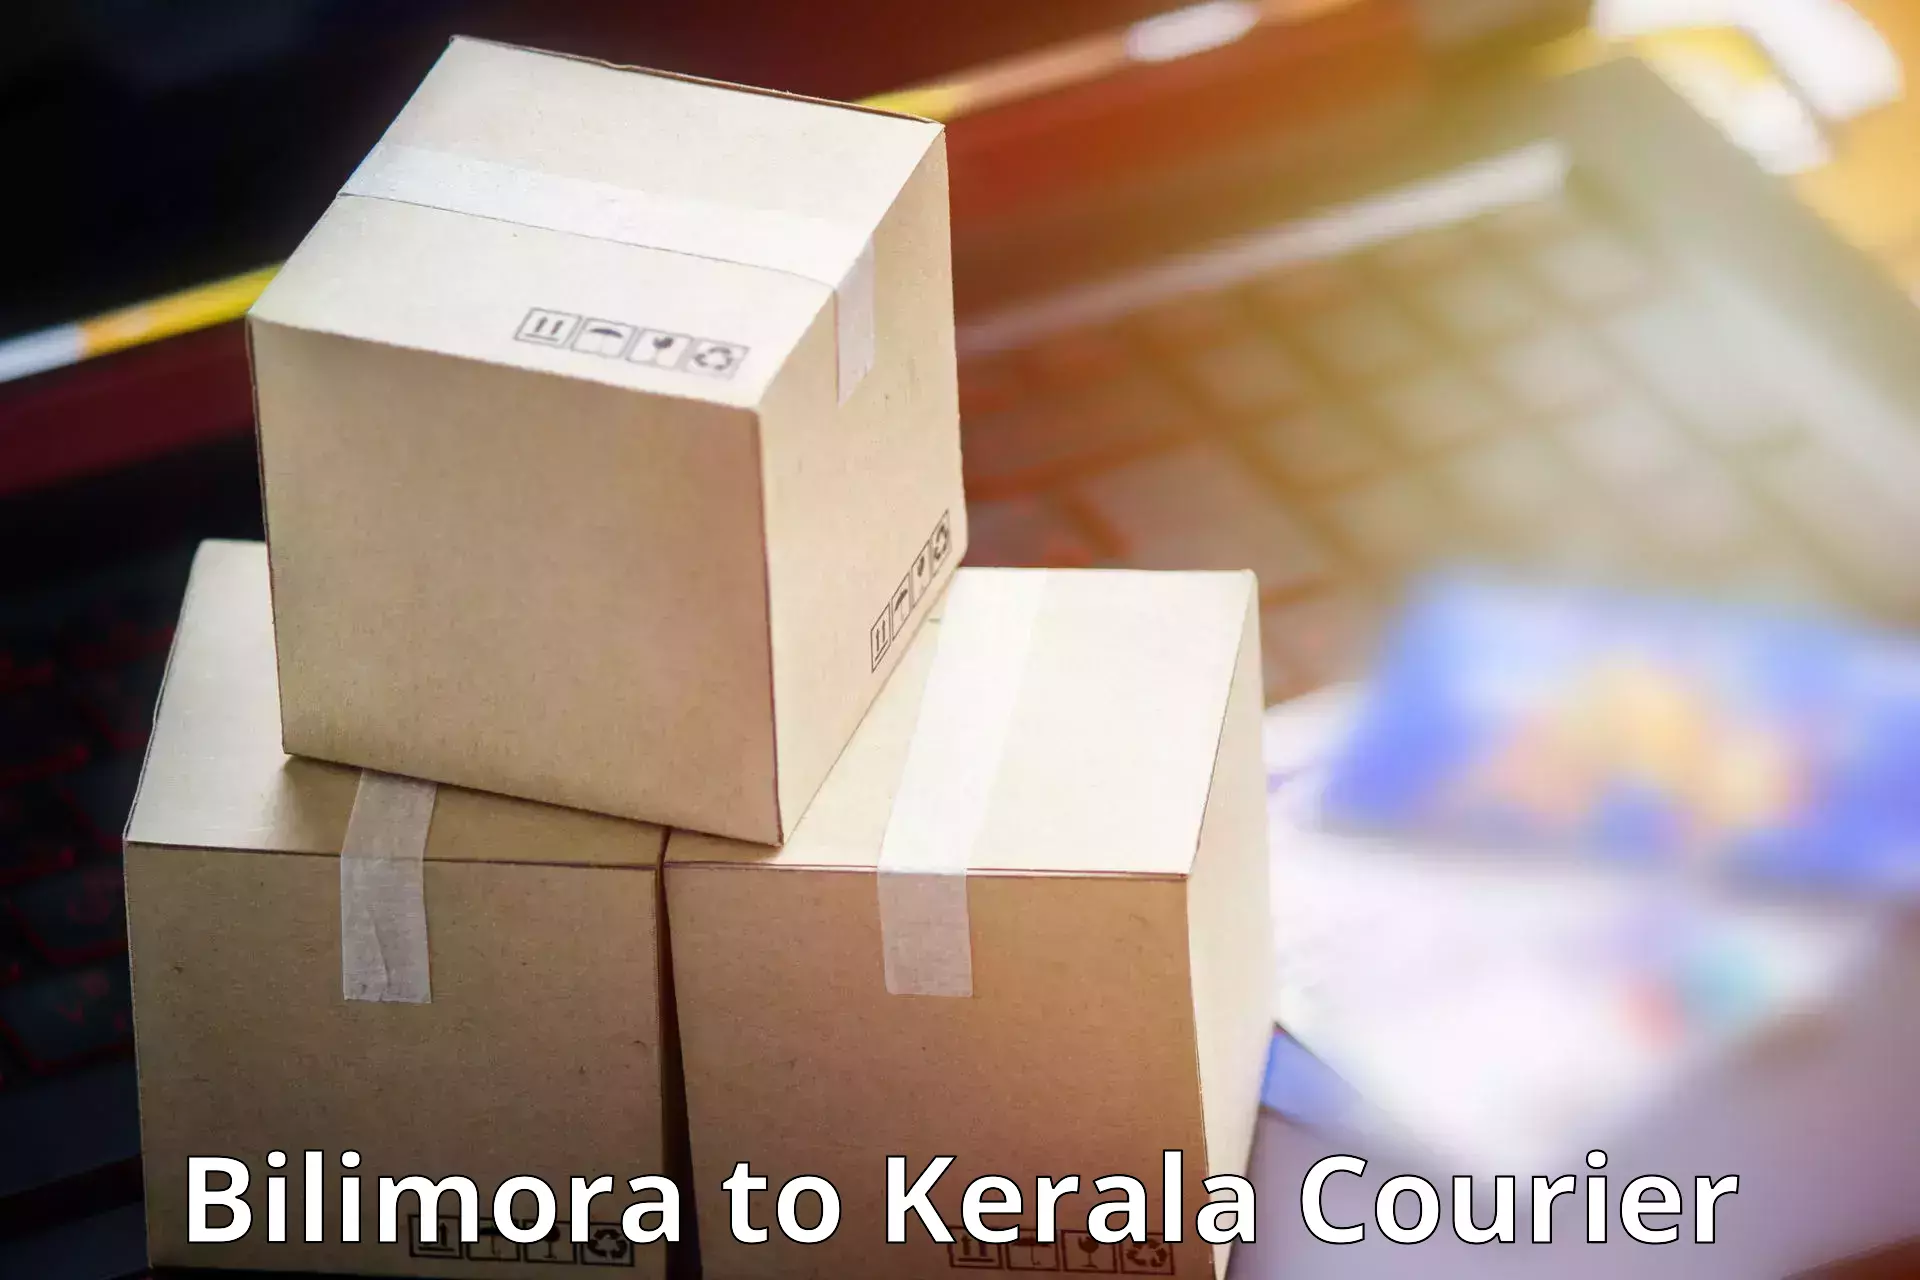 Courier service partnerships Bilimora to Kodungallur